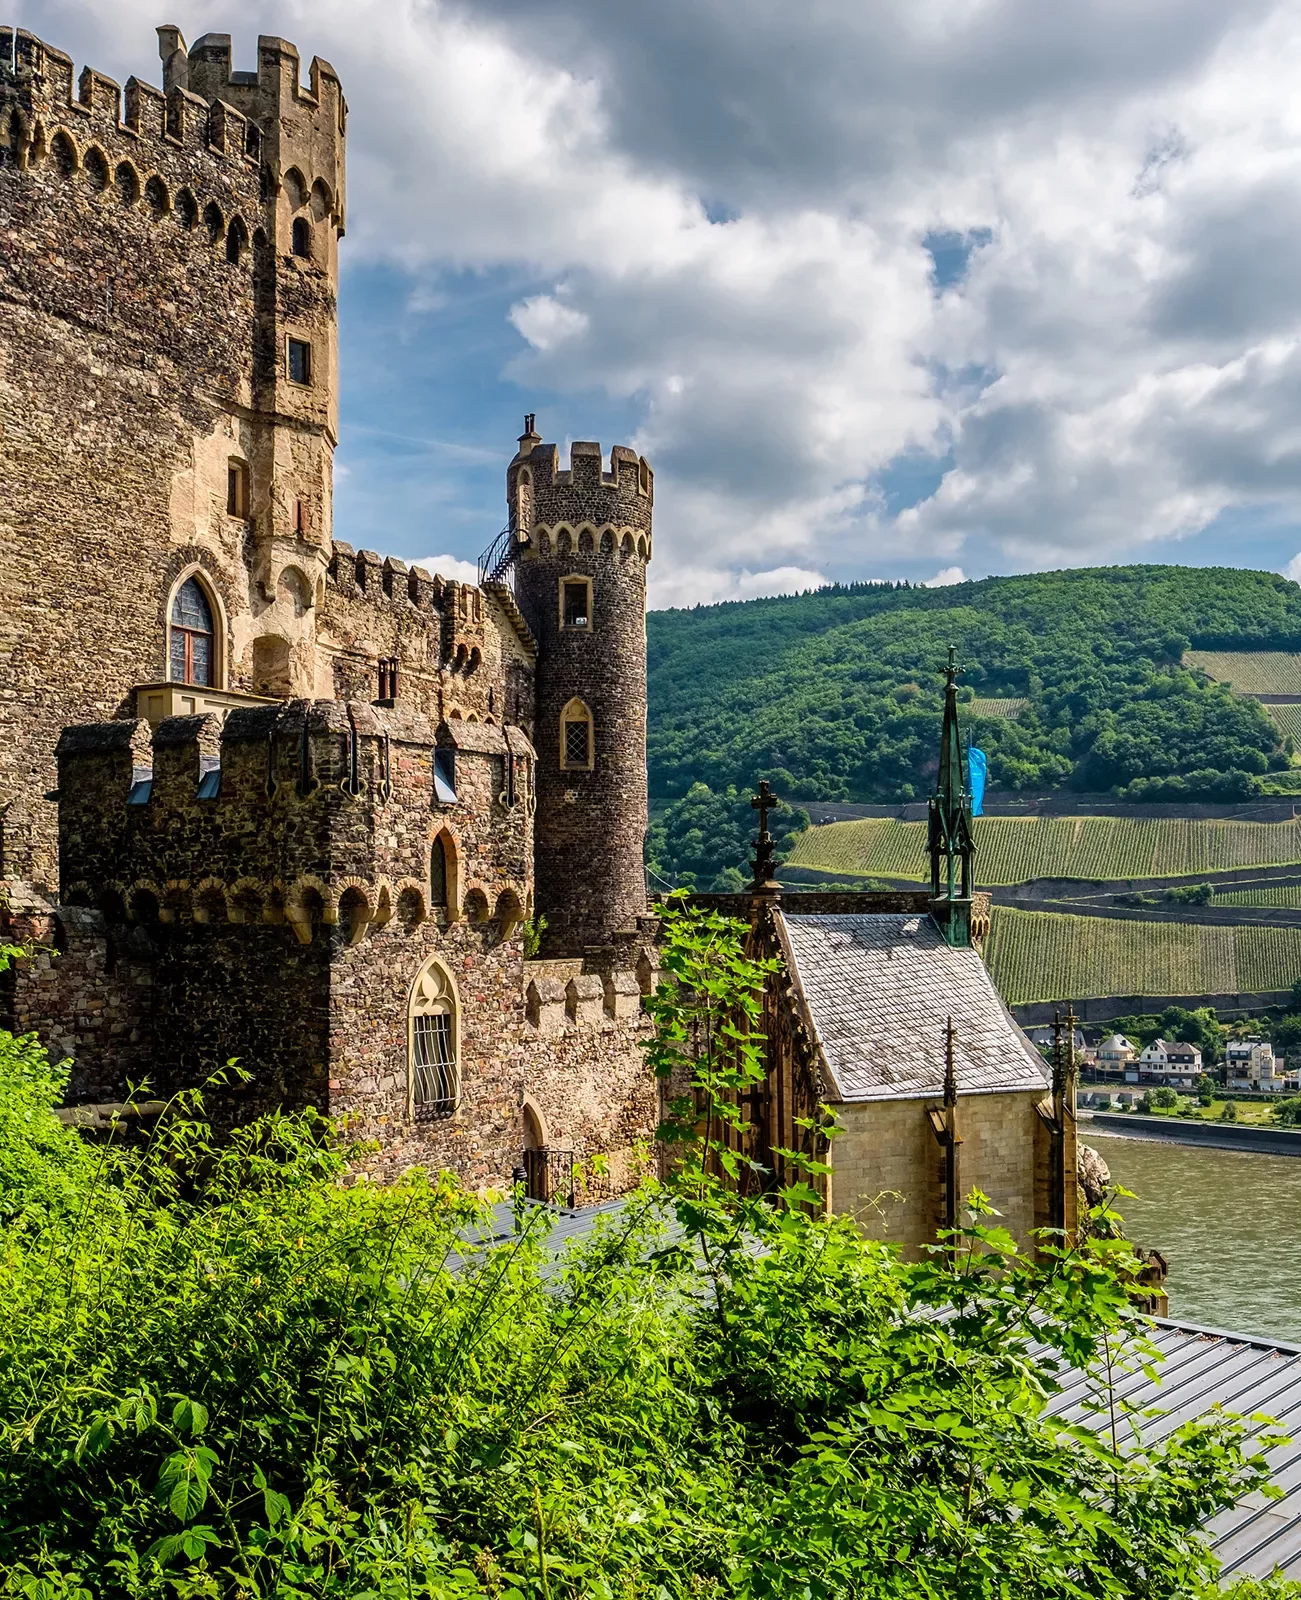 Castle Rhine River